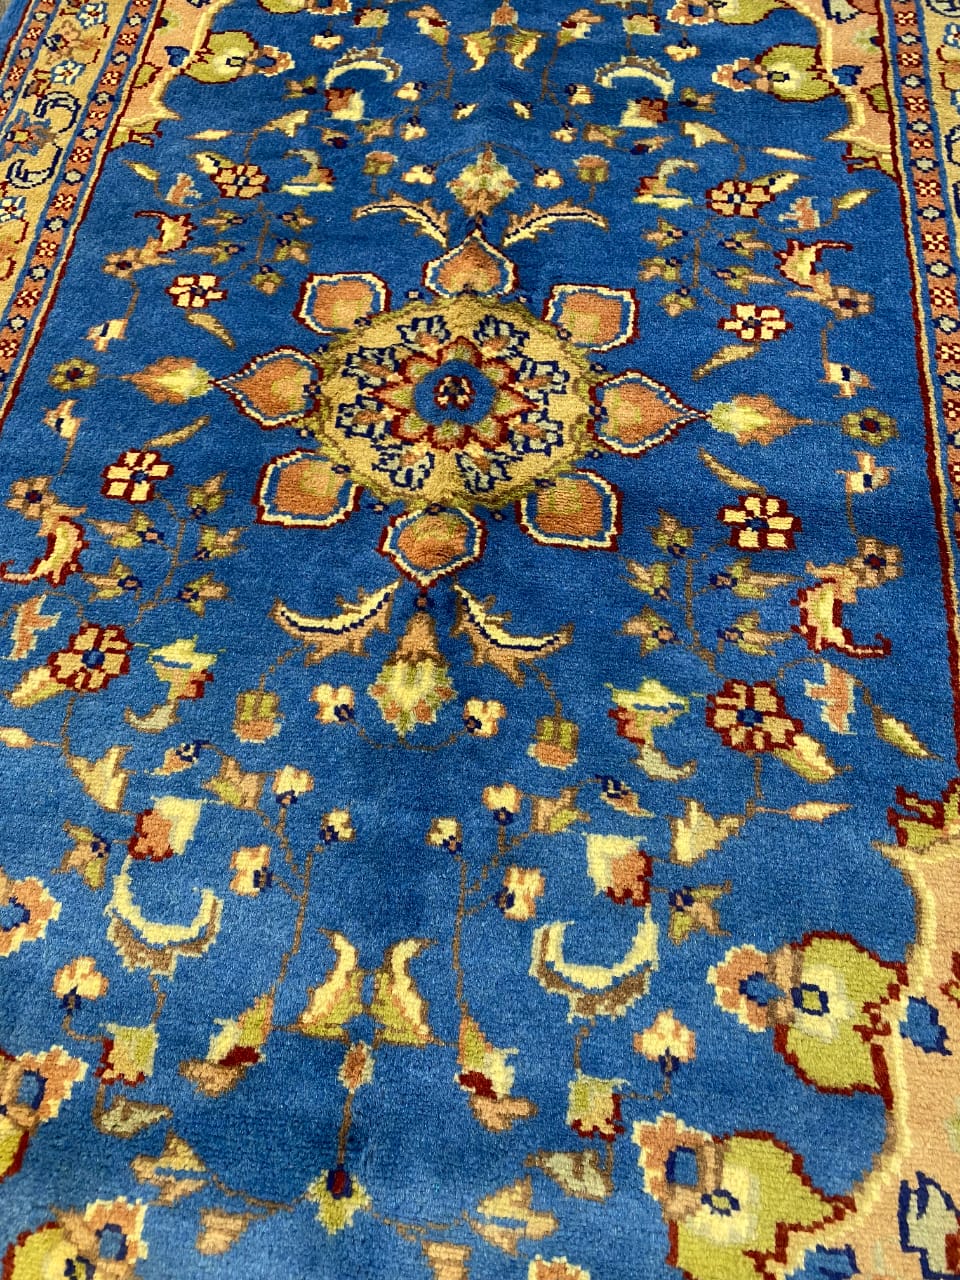 Pakistani Hand Knotted; Persian Carpet 3x5ft